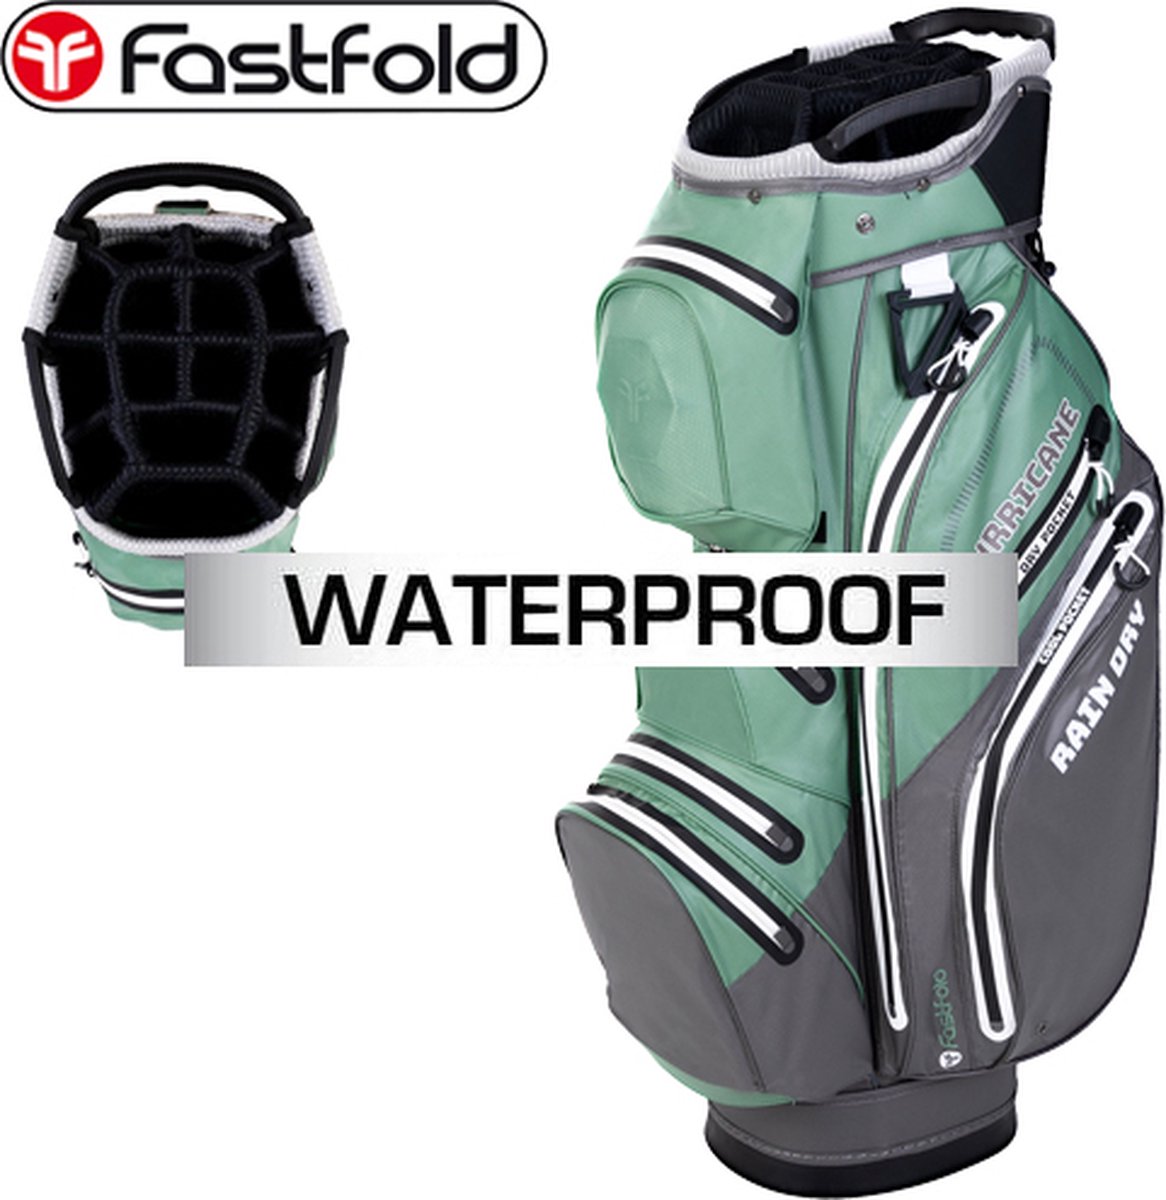 Fastfold Hurricane Waterproof Cartbag, grijs/groen/wit